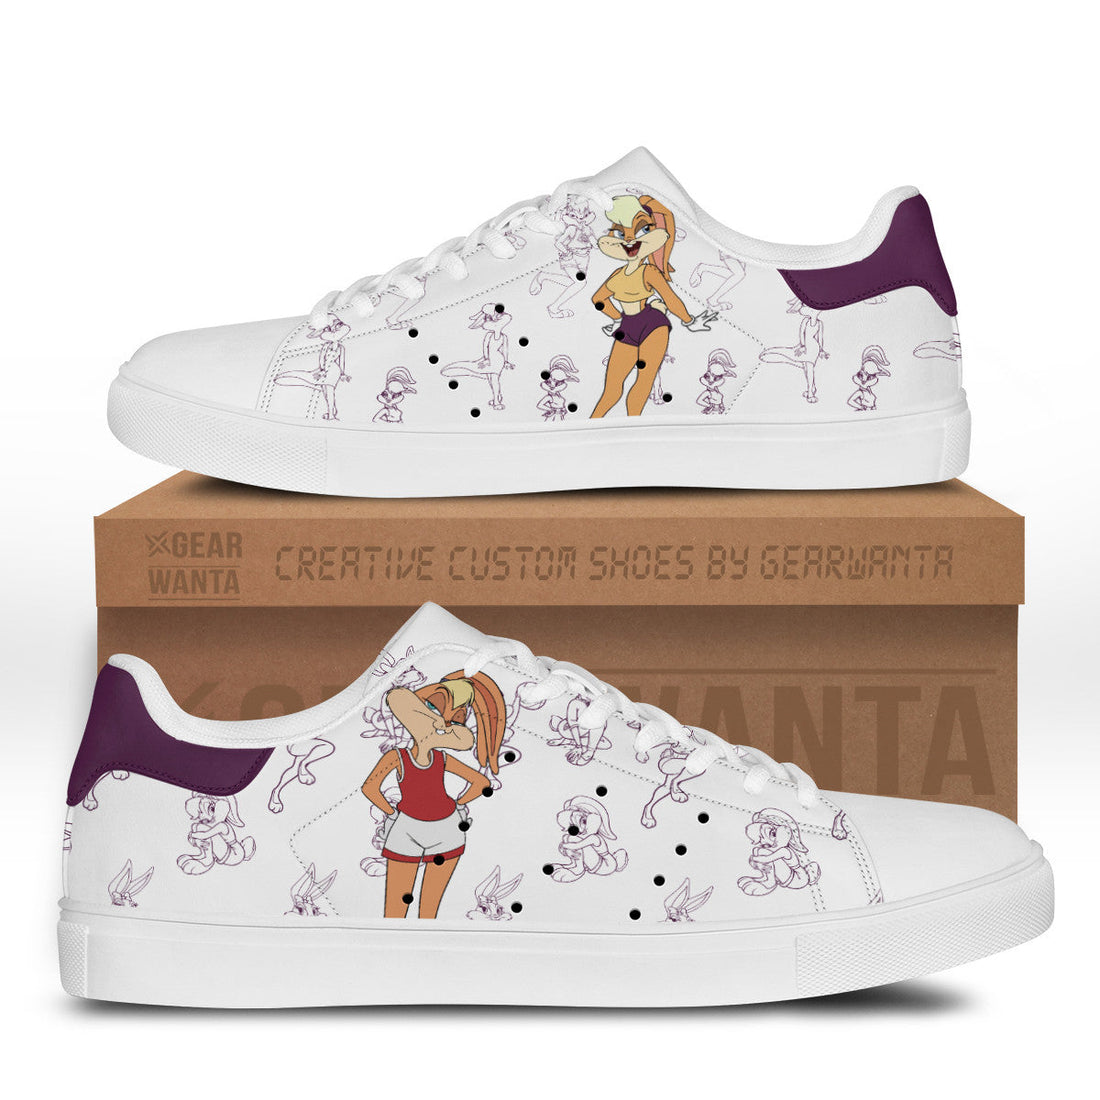 Lola Bunny Stan Shoes Custom Looney Tunes Cartoon Shoes-Gear Wanta